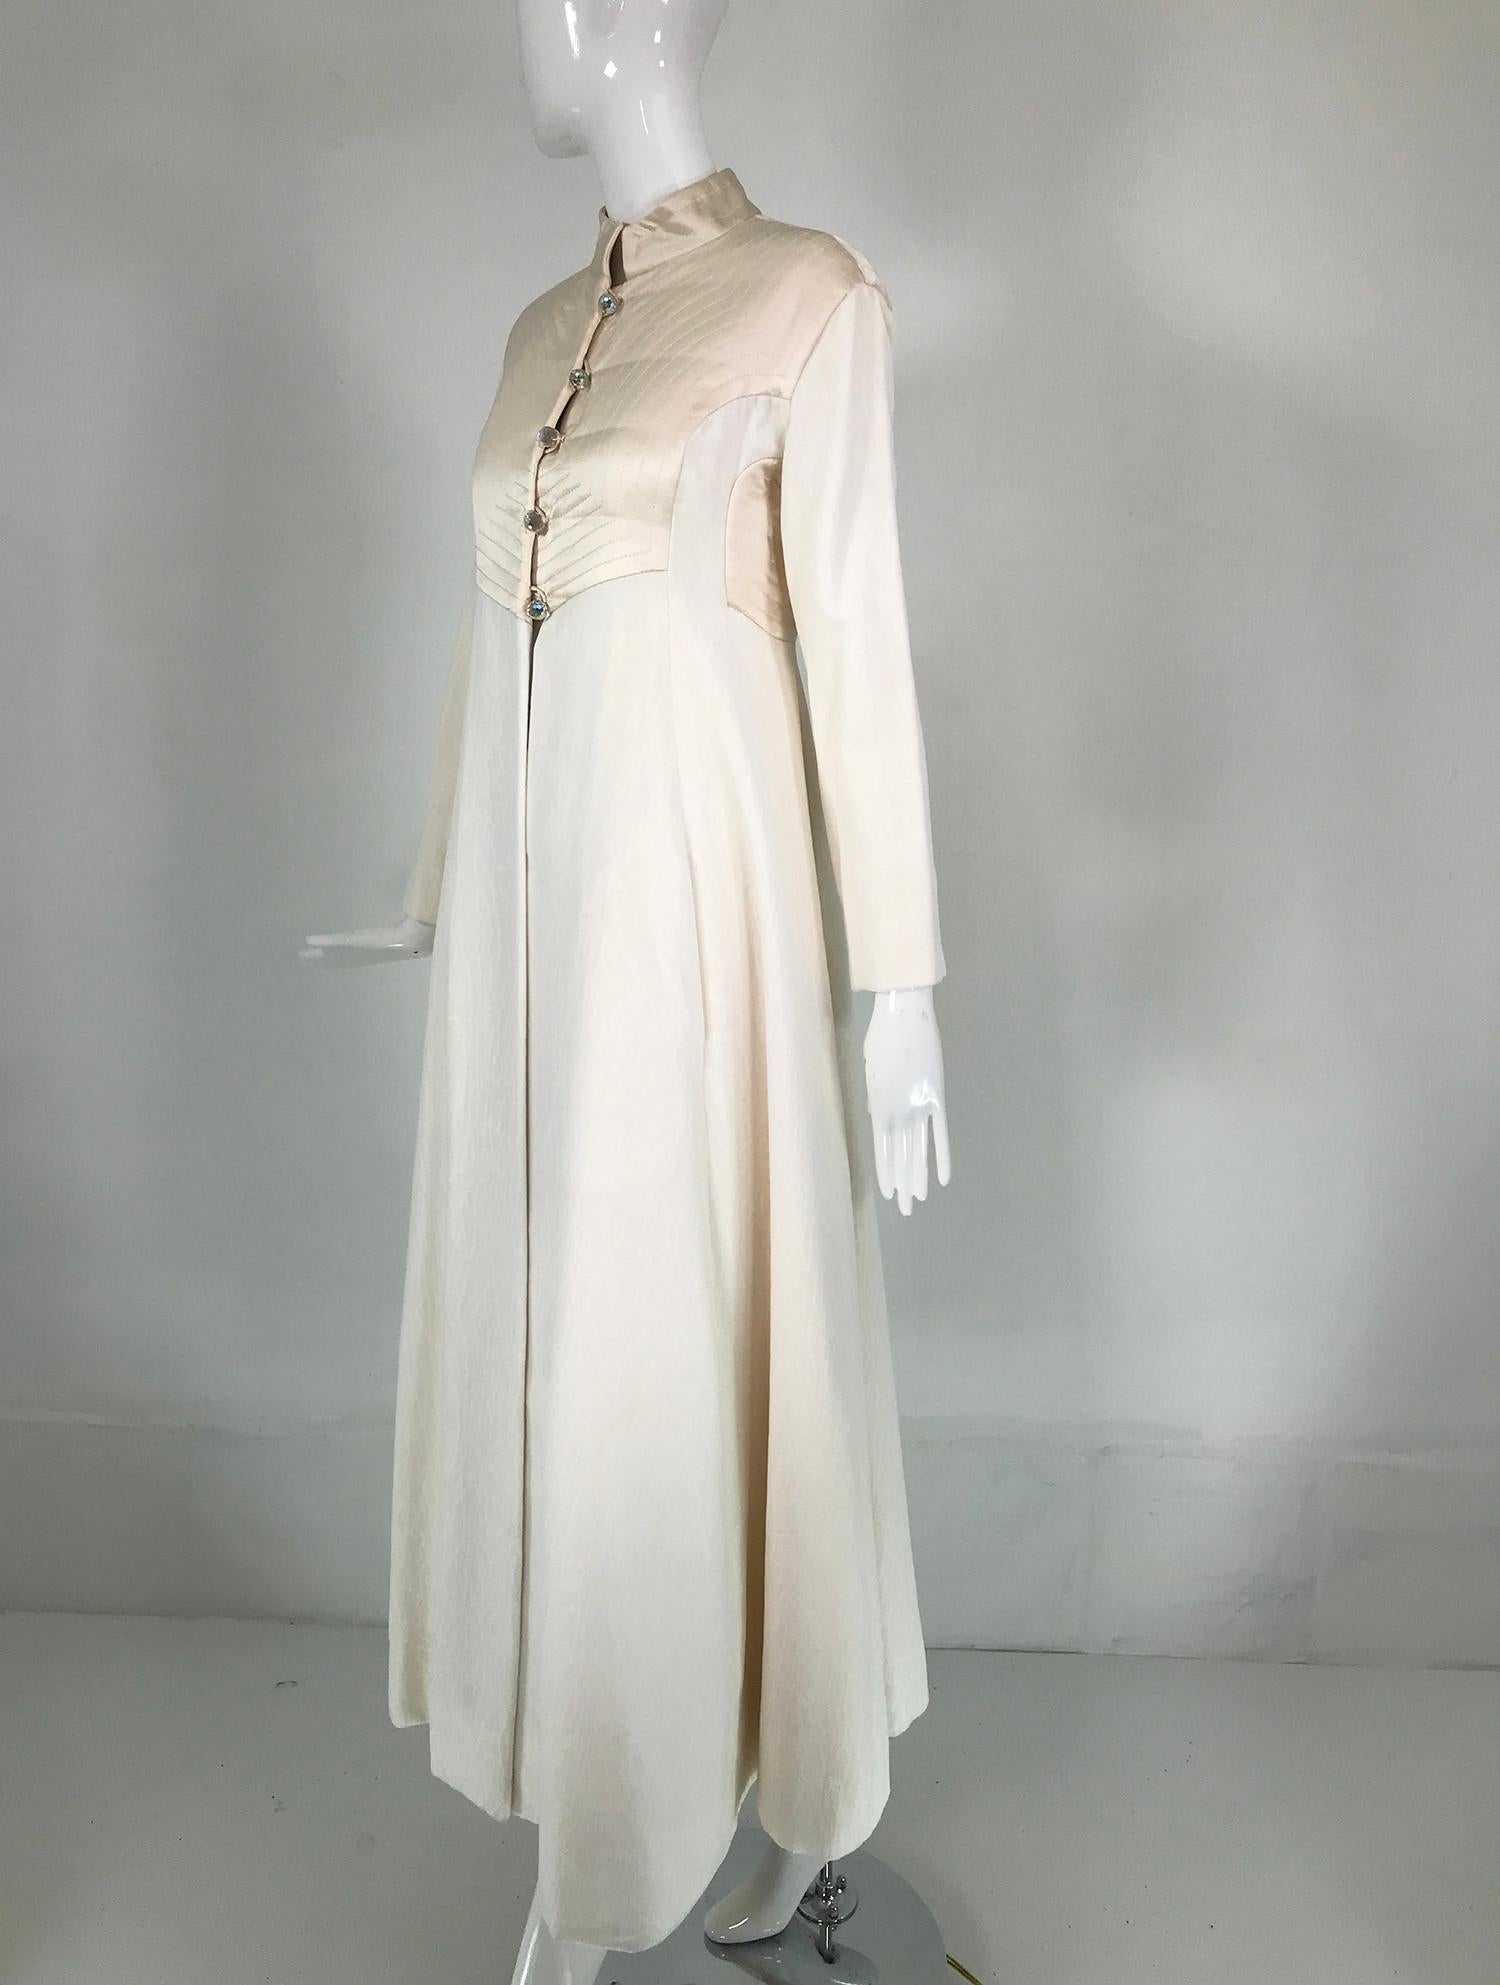 Gray Ronald Amey Rare Evening Coat & Evening Dress in Devore Velvet & Satin 1970s For Sale